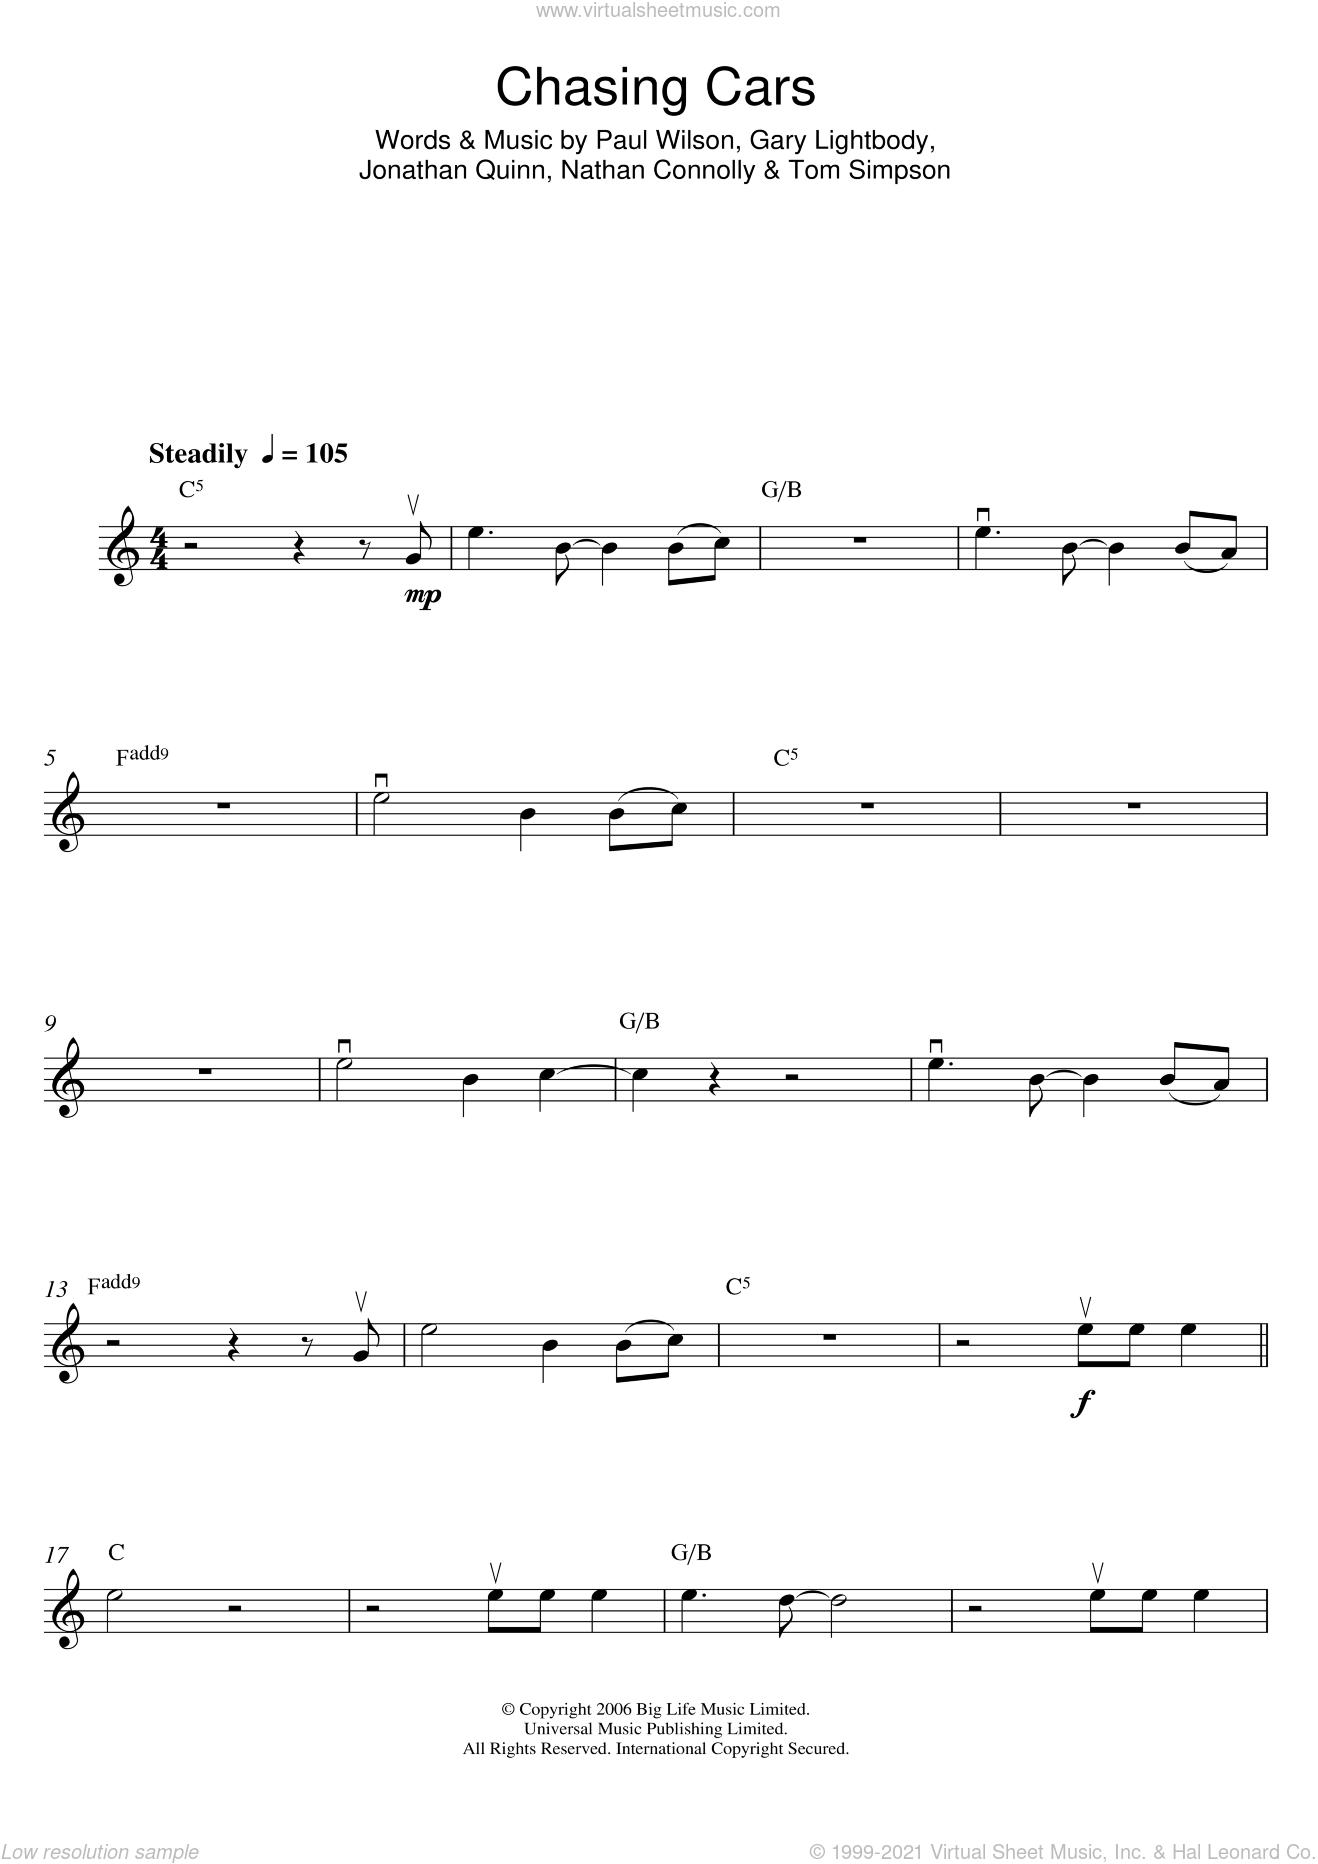 Chasing Cars sheet music for violin solo (PDF) v2